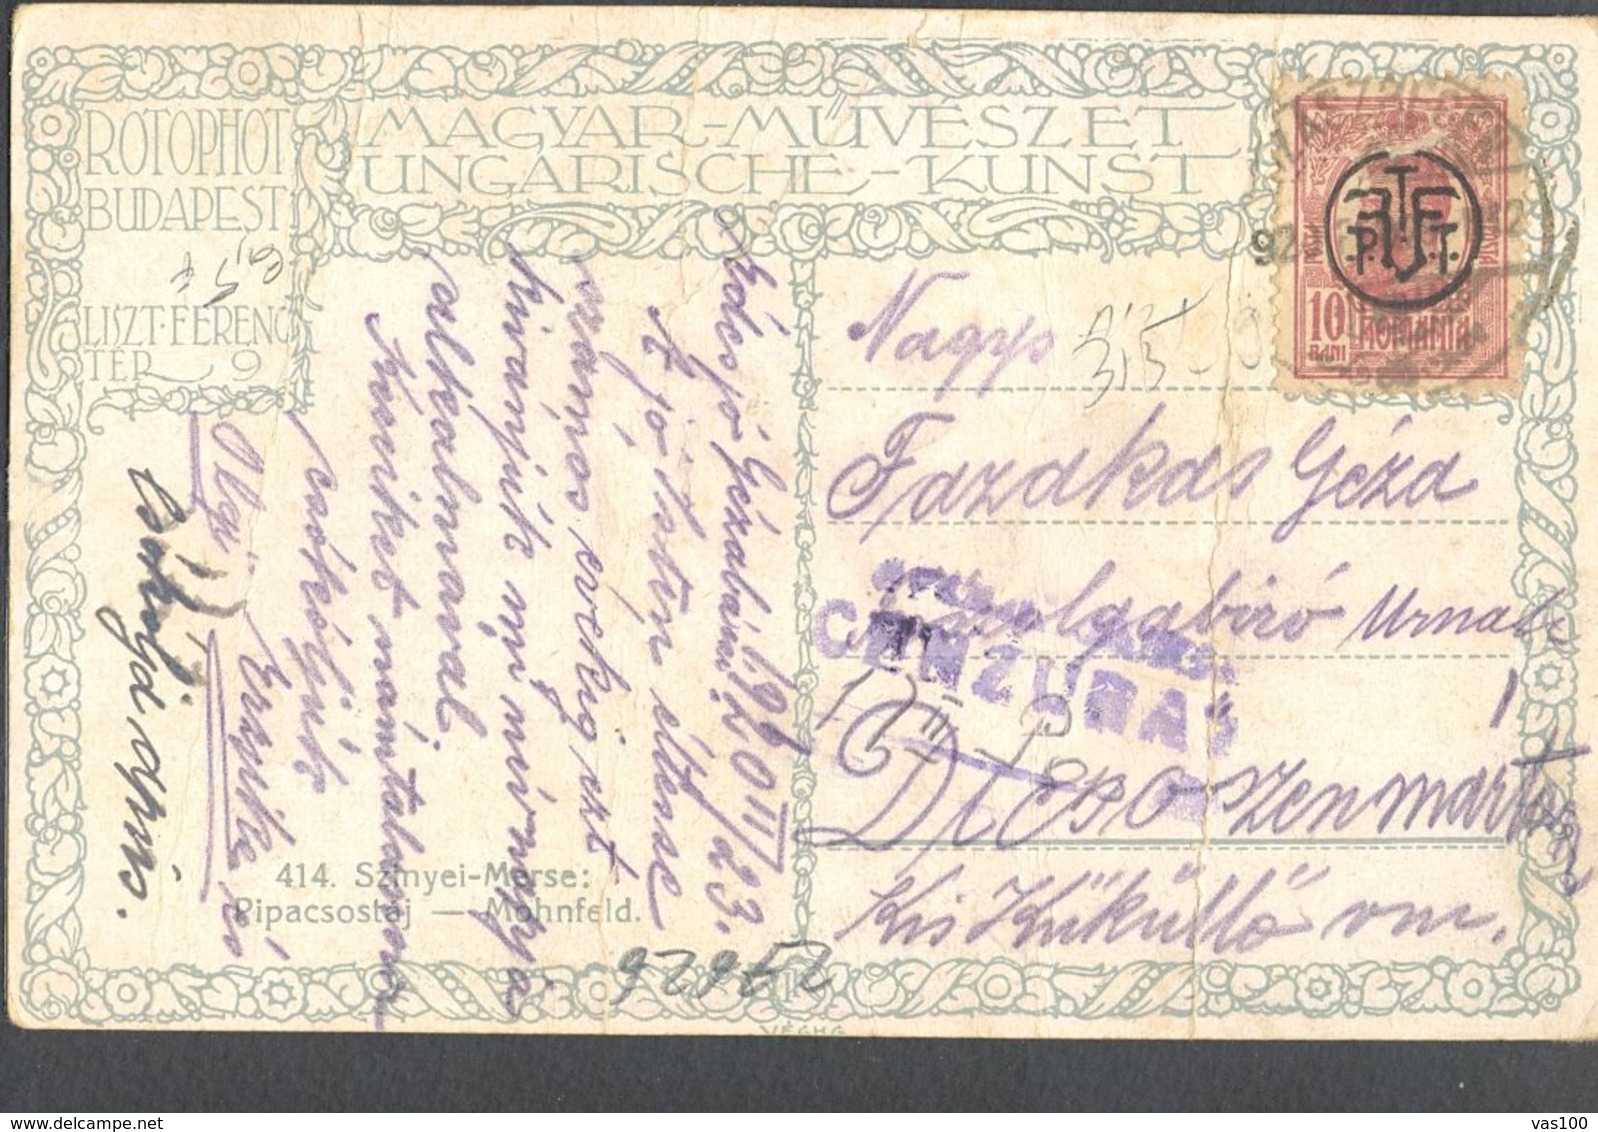 WW1 CENSORSHIP ON SZMYEI- POPPY FIELD PAINTING POSTCARD, 1920, ROMANIA - Lettres 1ère Guerre Mondiale